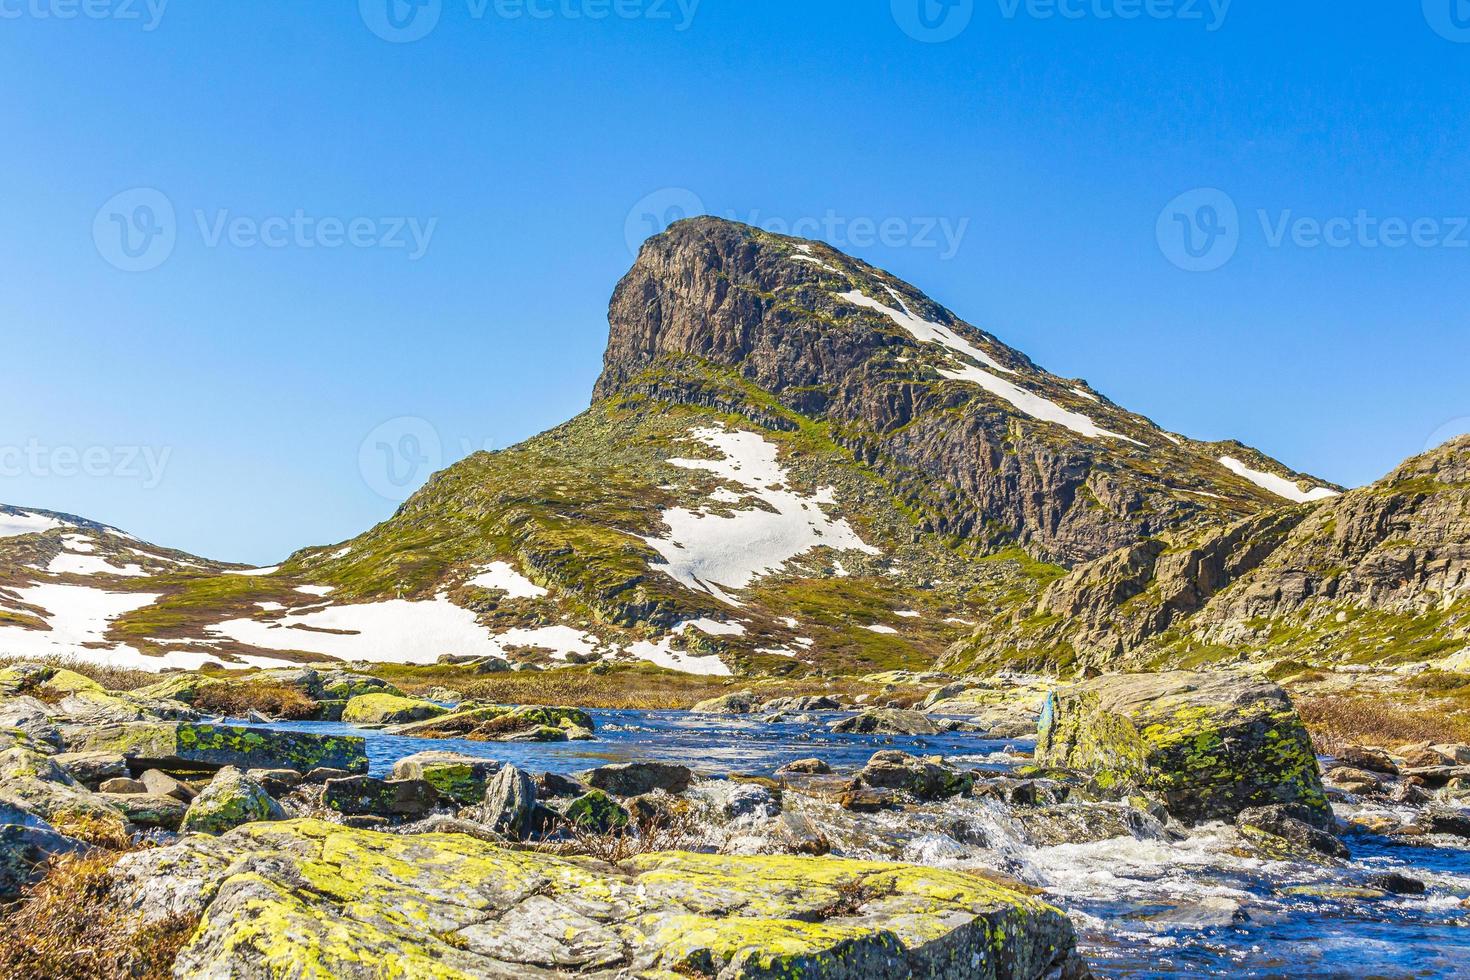 erstaunlicher berggipfel bei veslehodn veslehorn hydnefossen wasserfall hemsedal norwegen. foto